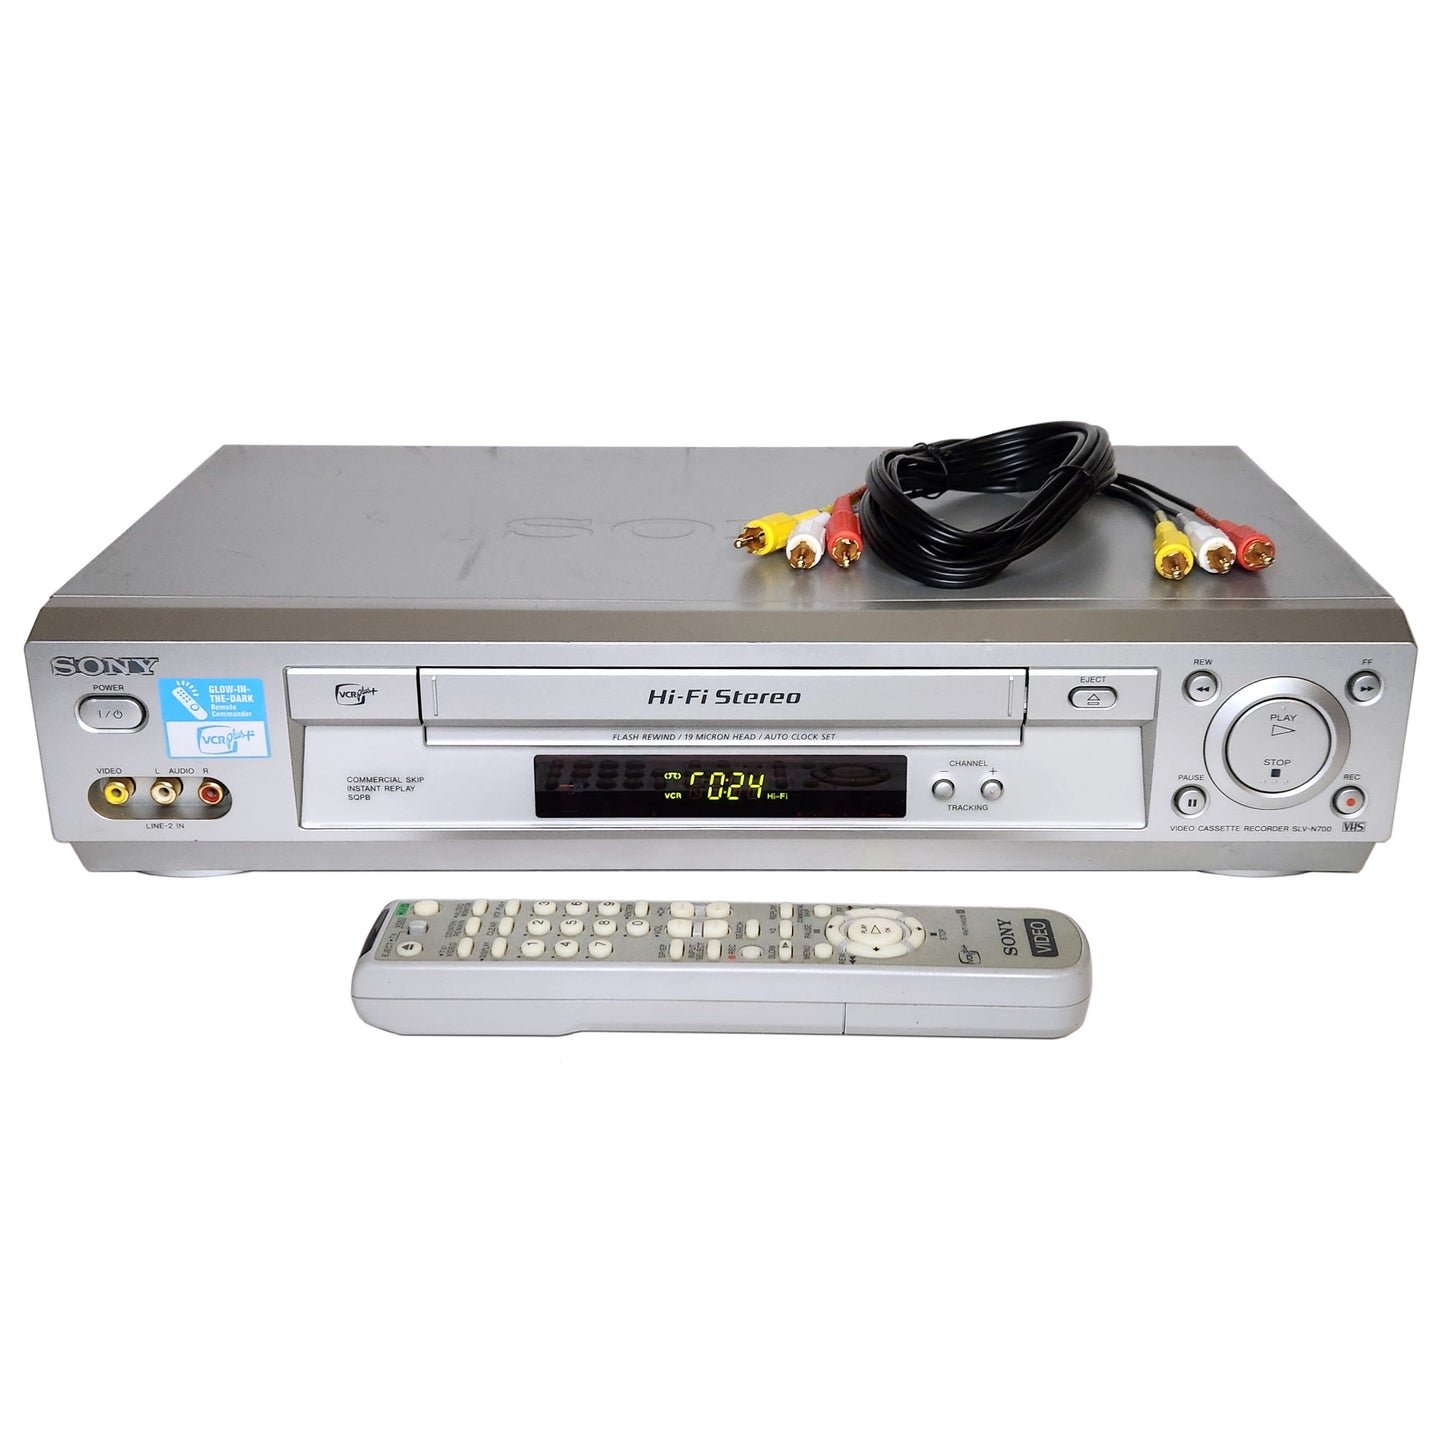 Sony SLV-N700 VCR, 4-Head Hi-Fi Stereo